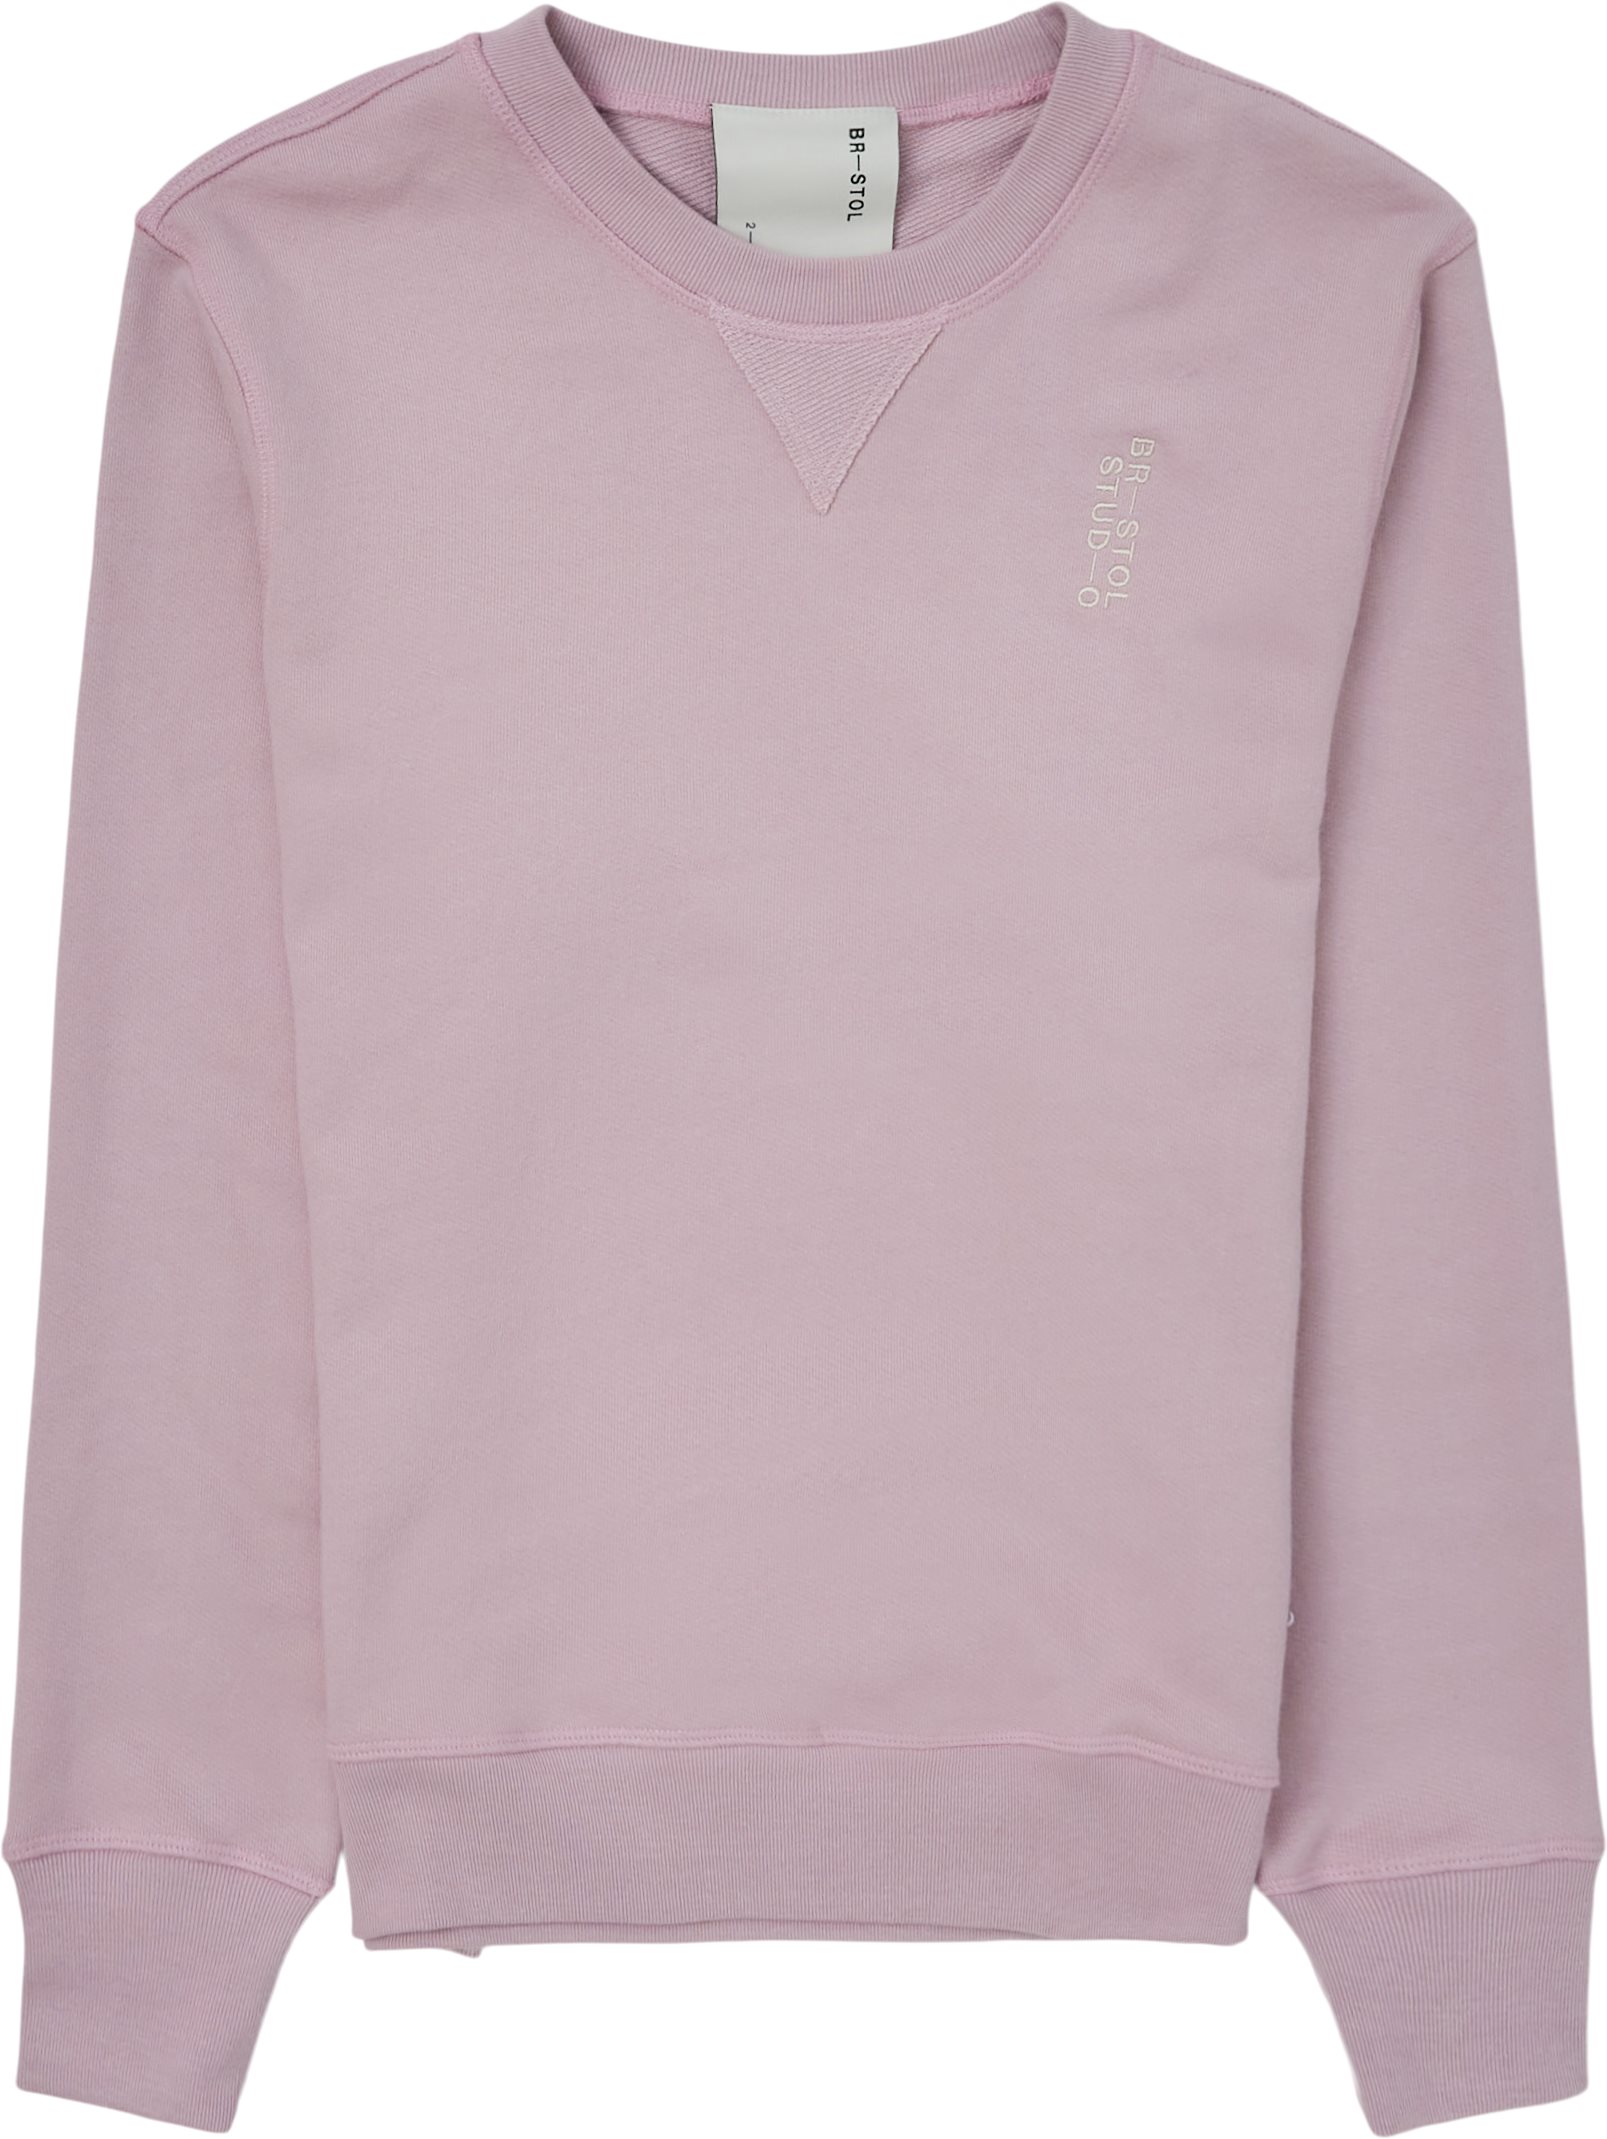 Signature Crewneck - Sweatshirts - Oversize fit - Lila